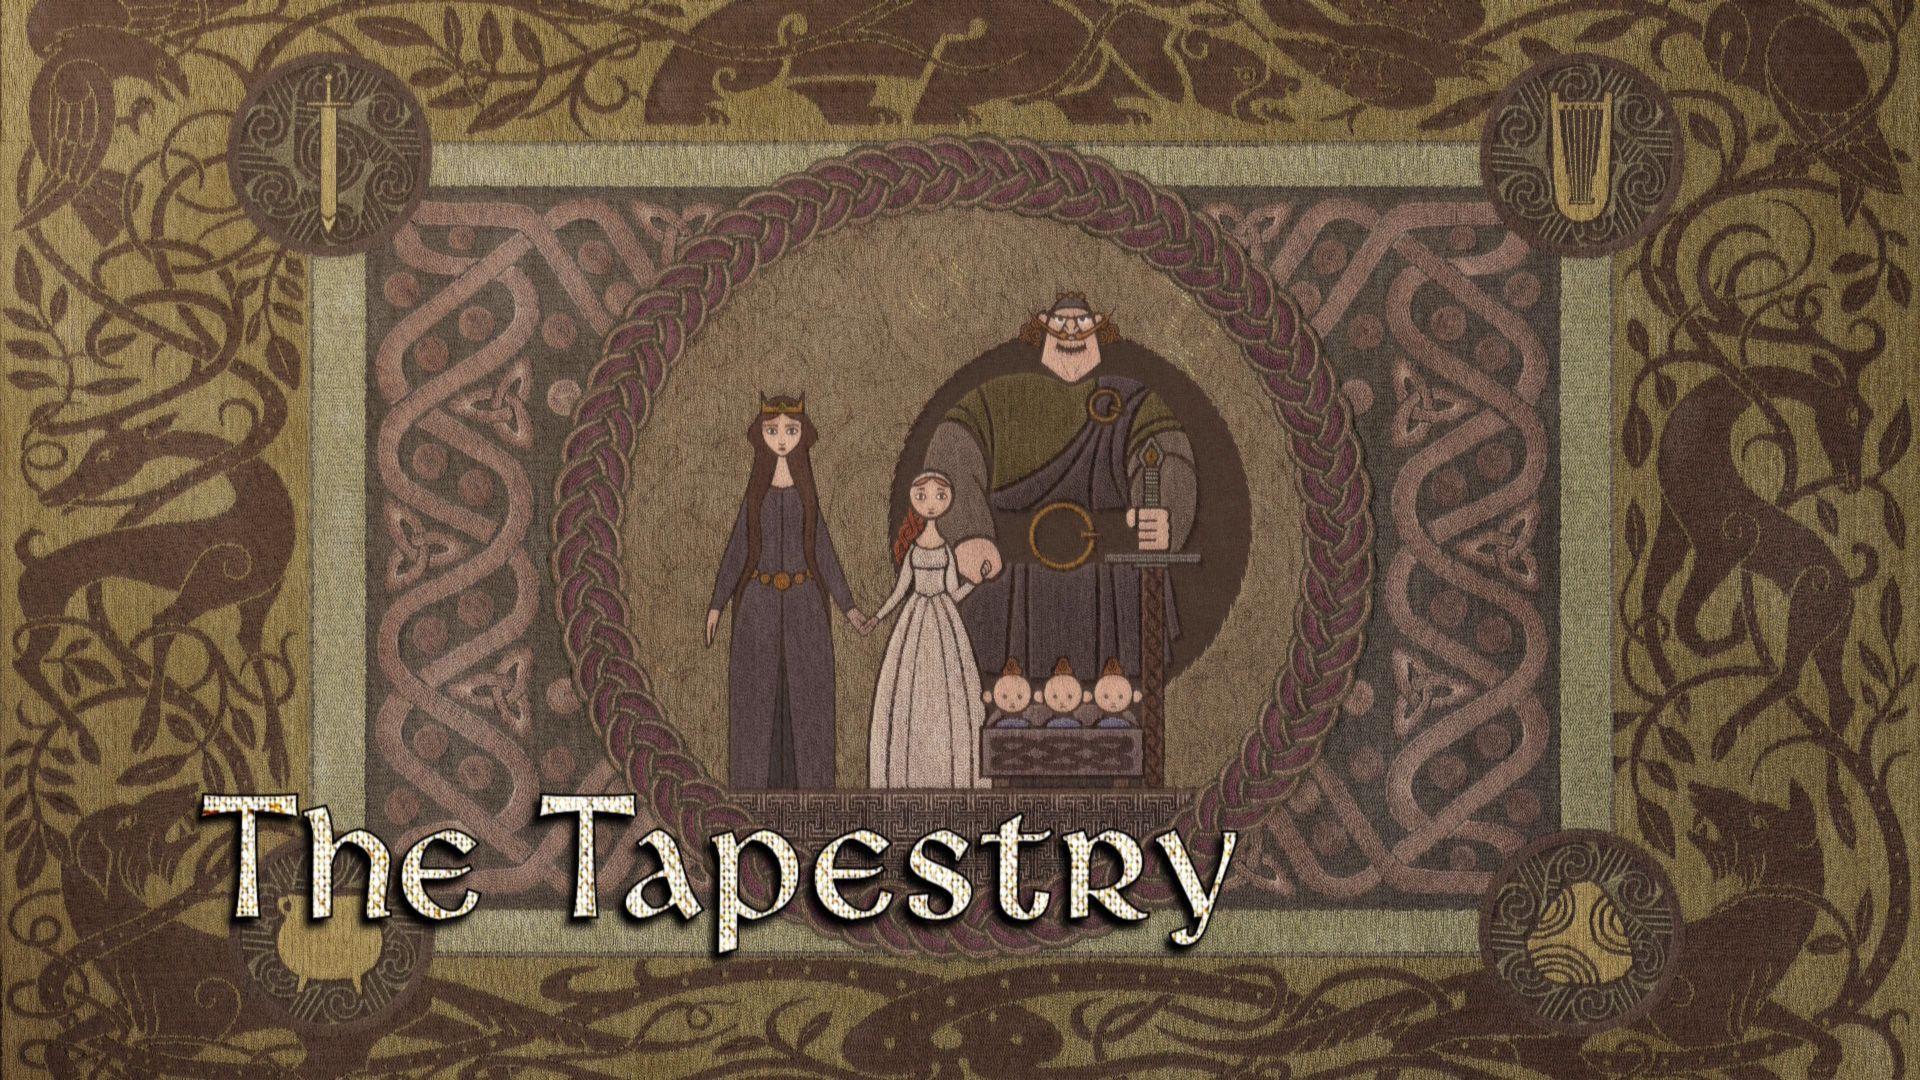 Brave tapestry. Disney Wiki powered